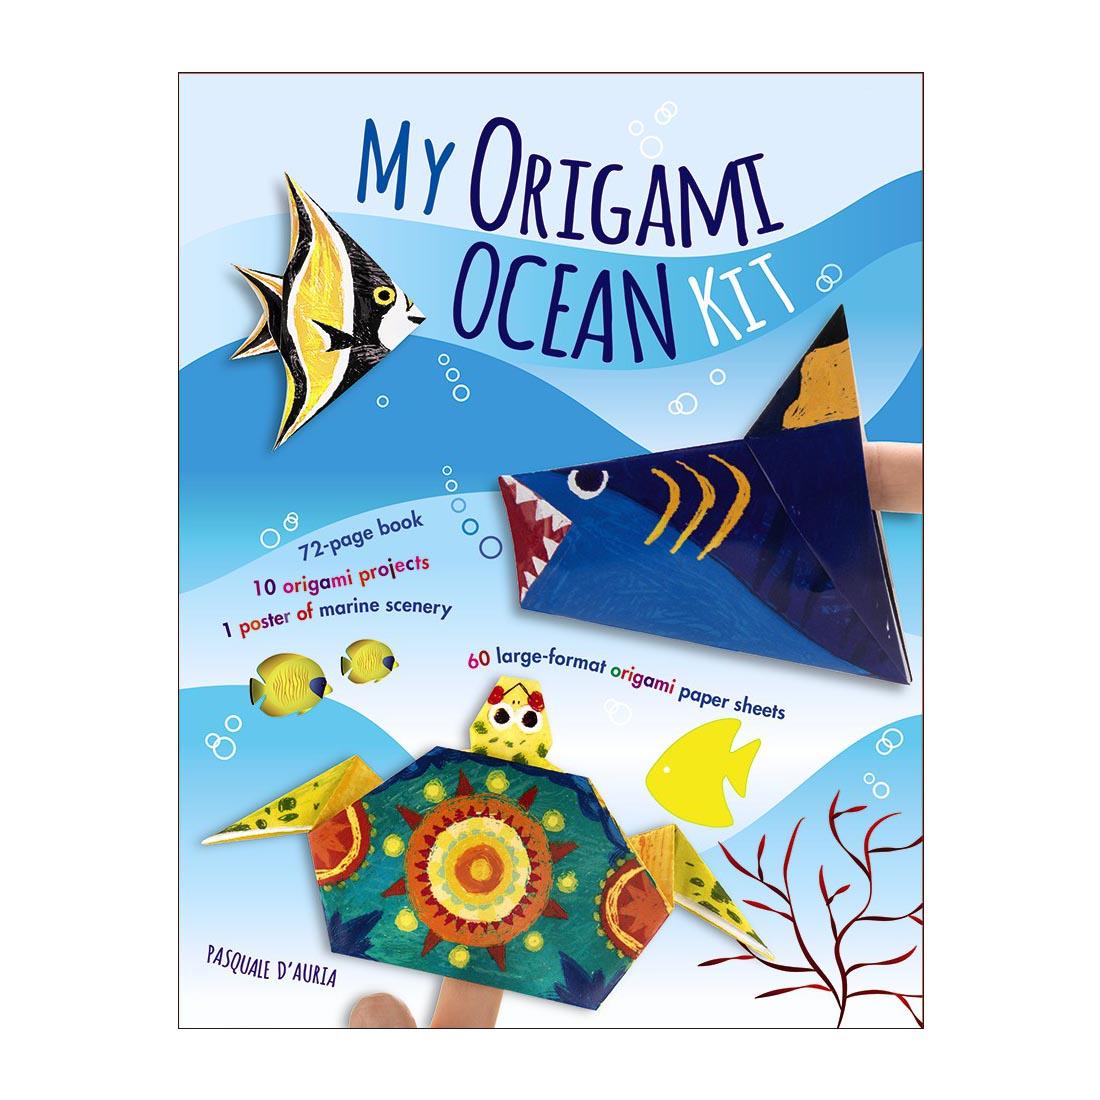 My Origami Ocean Kit